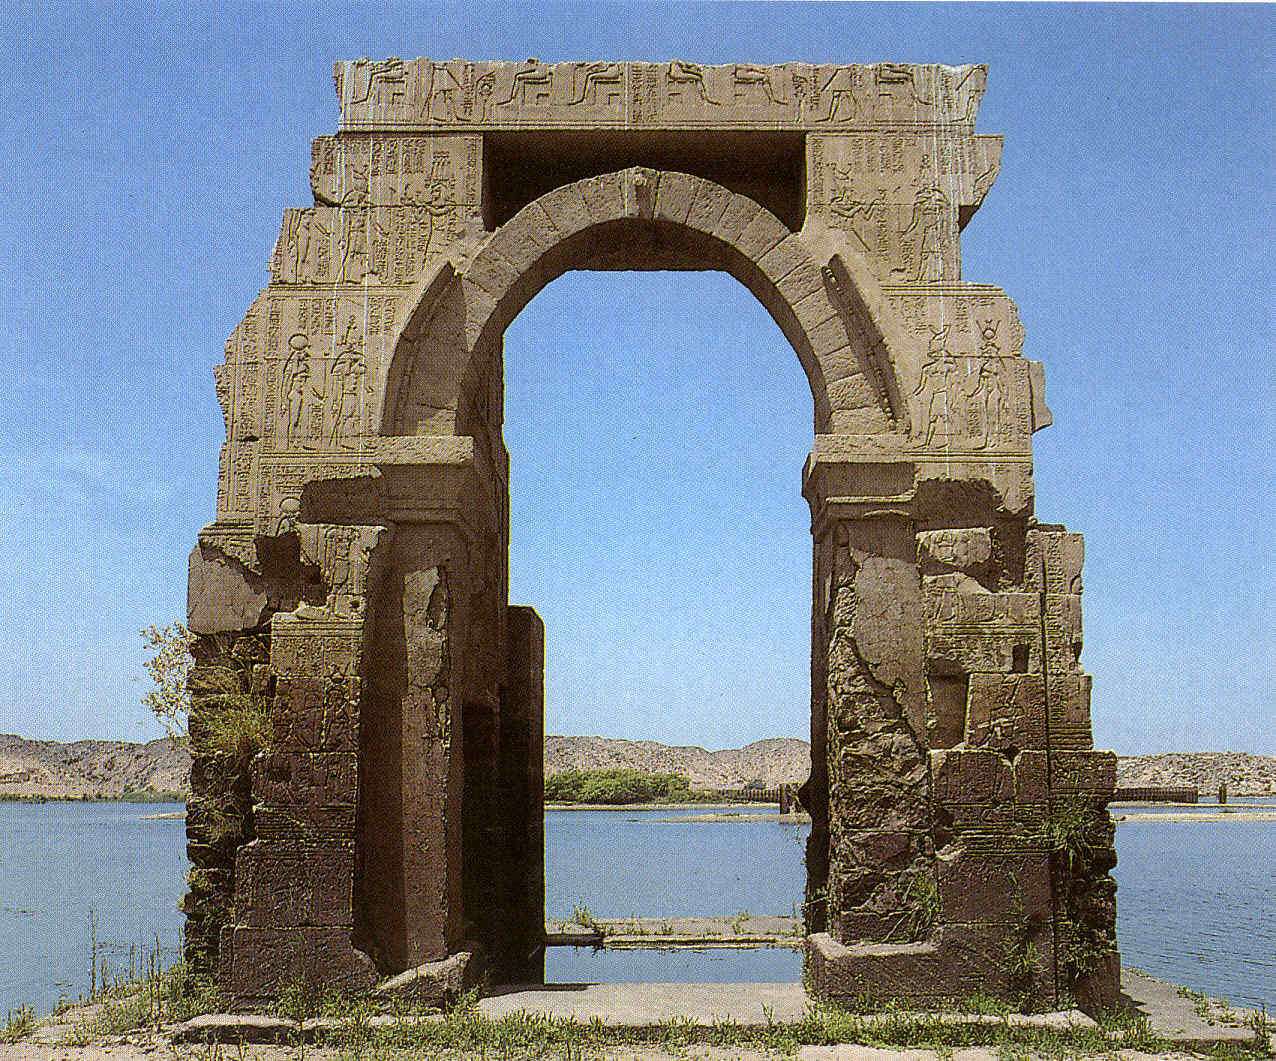 Templos ptolemaicos d File